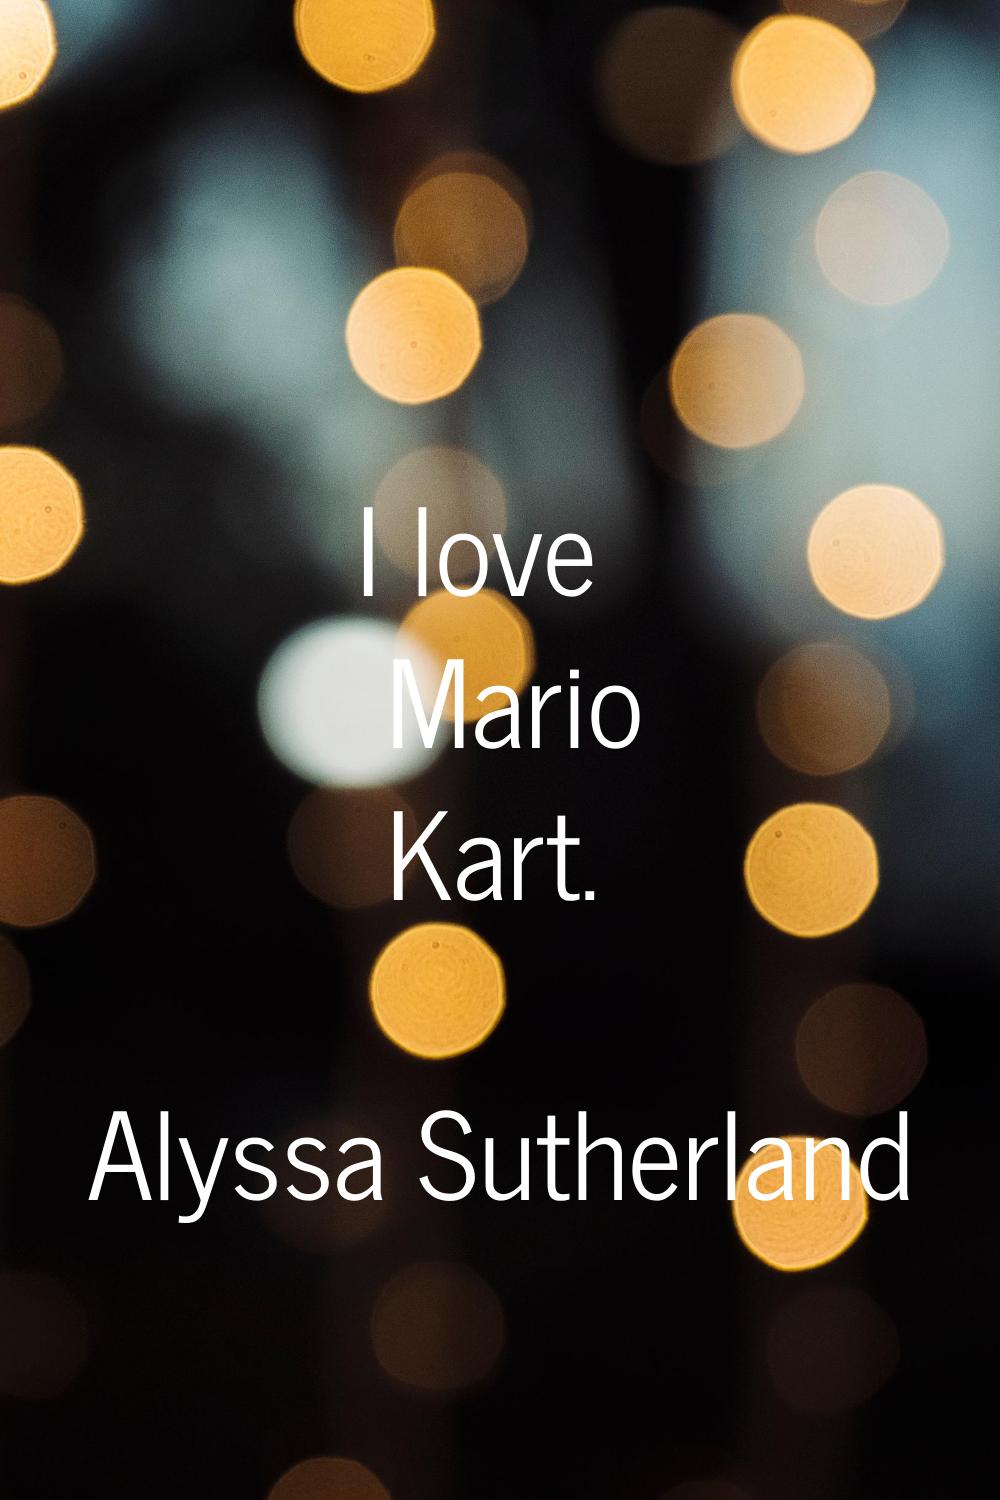 I love Mario Kart.